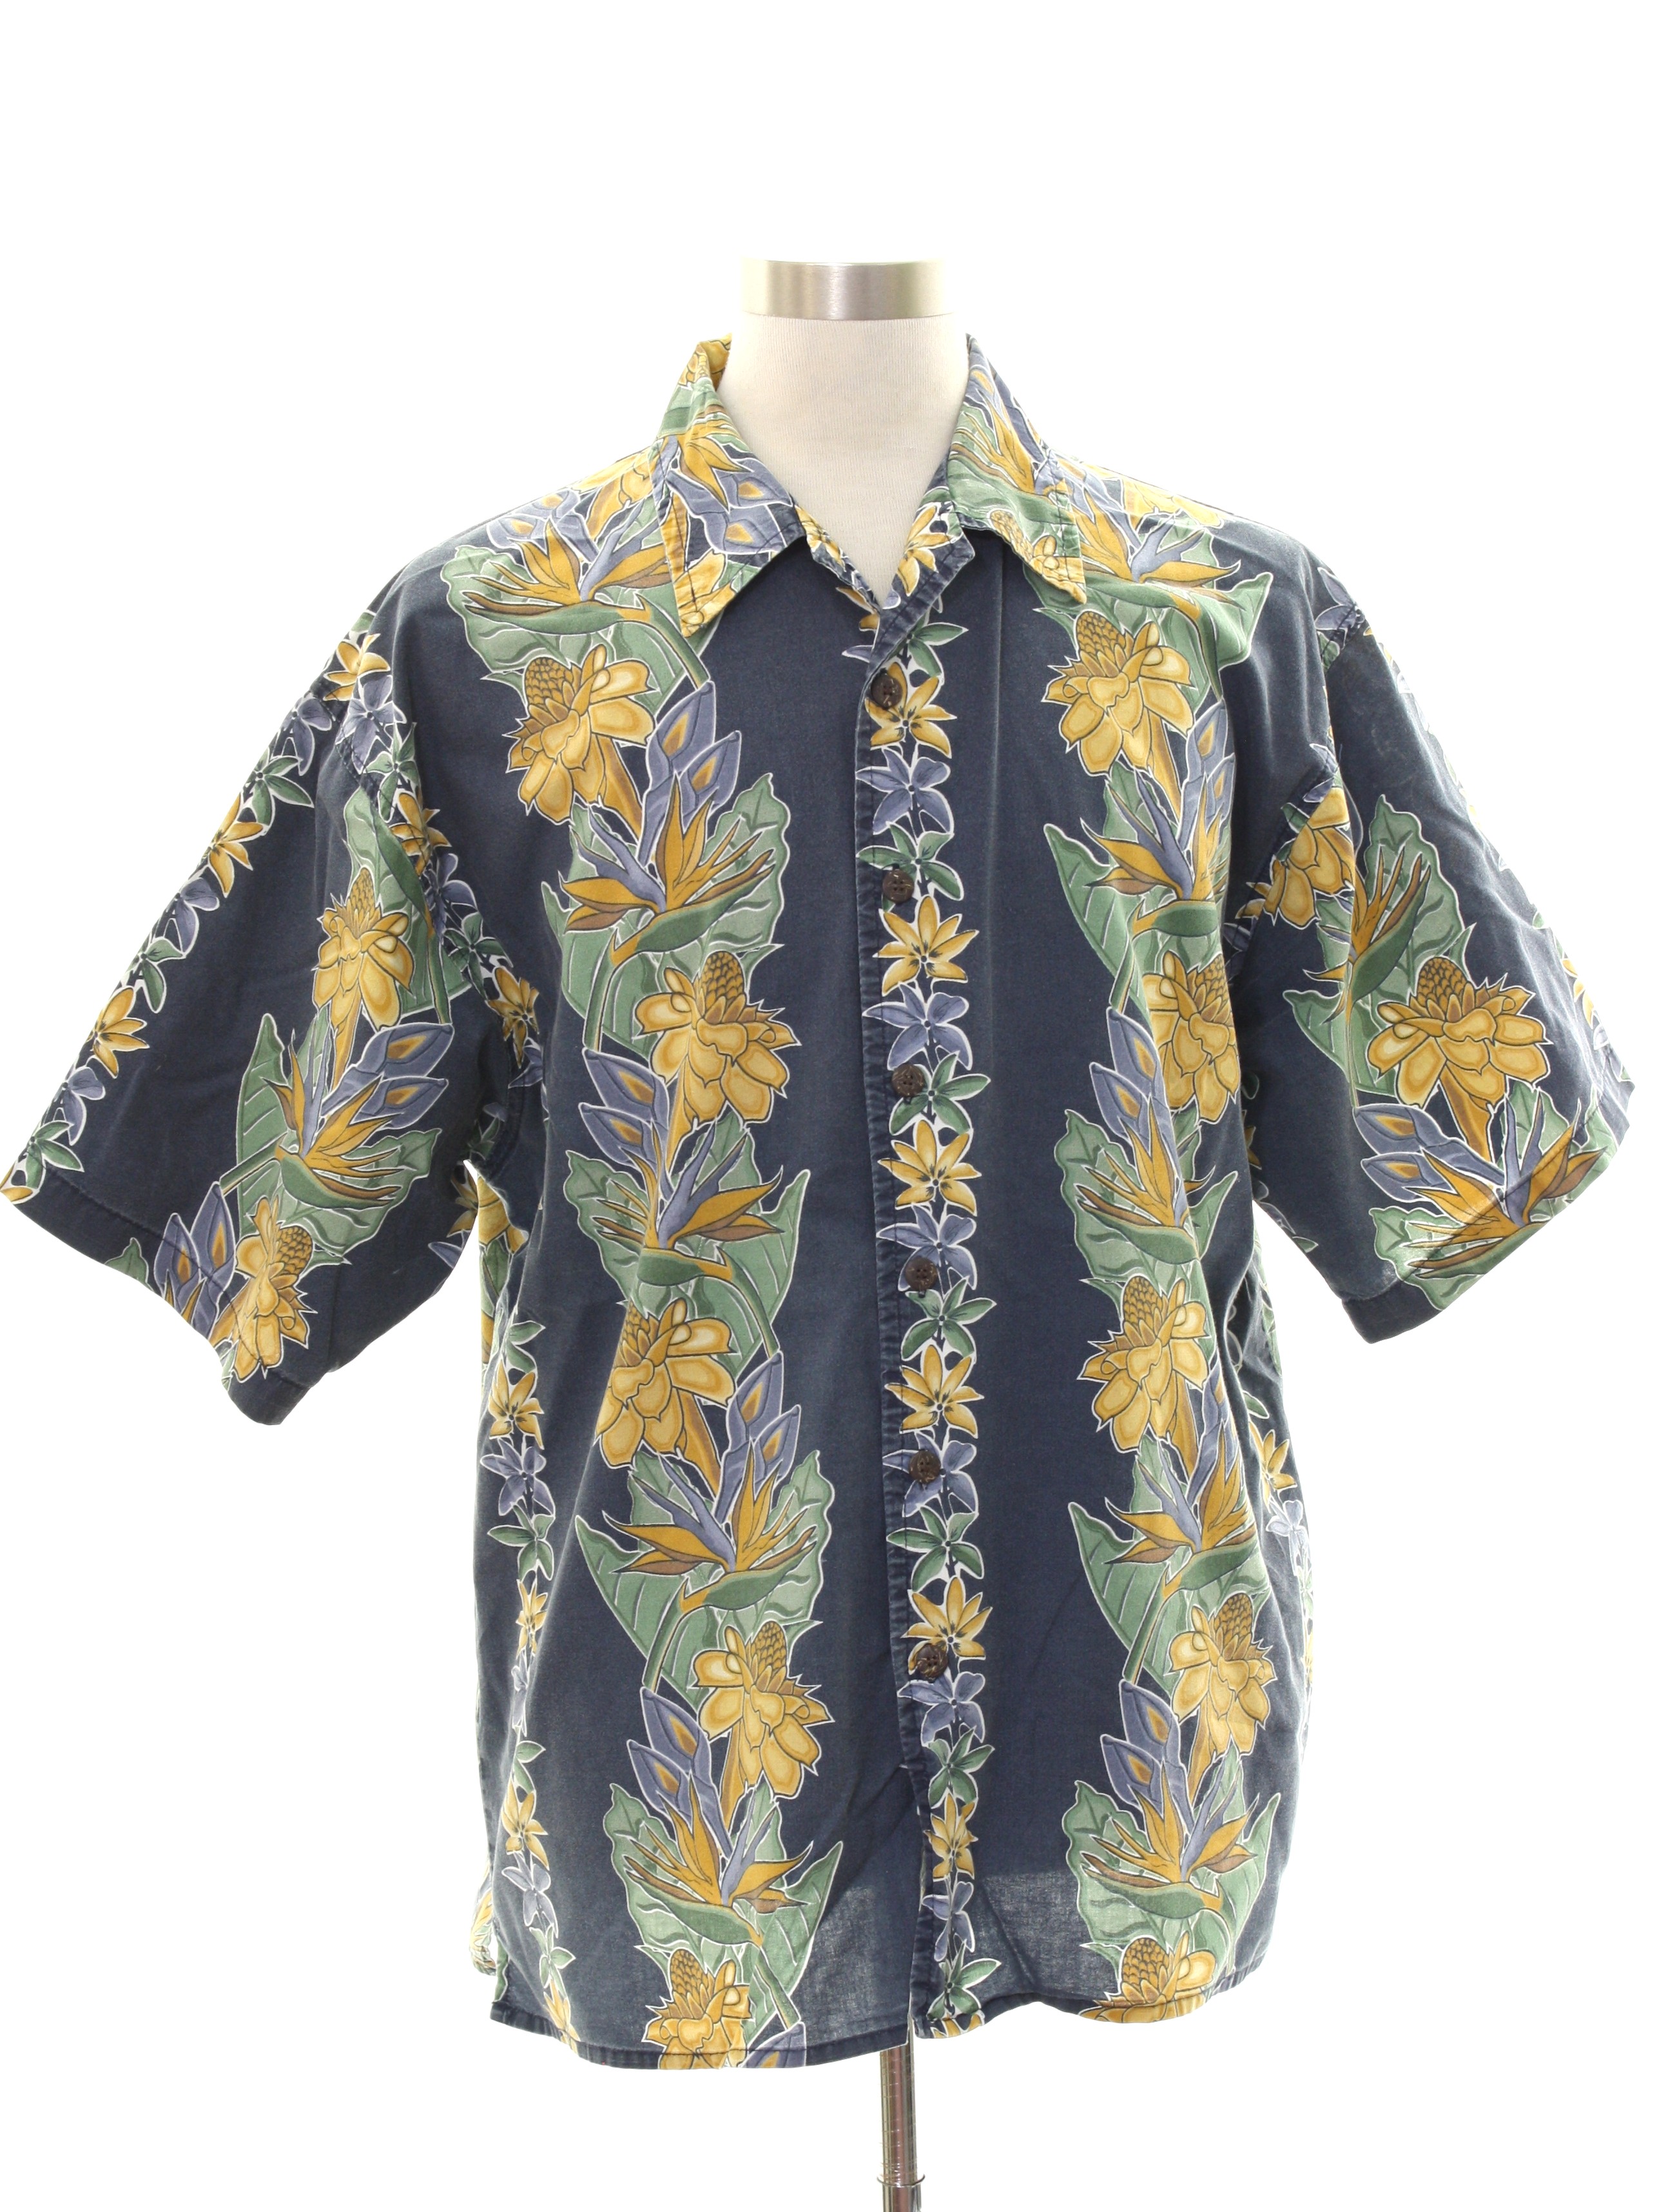 Retro Eighties Hawaiian Shirt: Early 80s -Puritan- Mens teal background ...